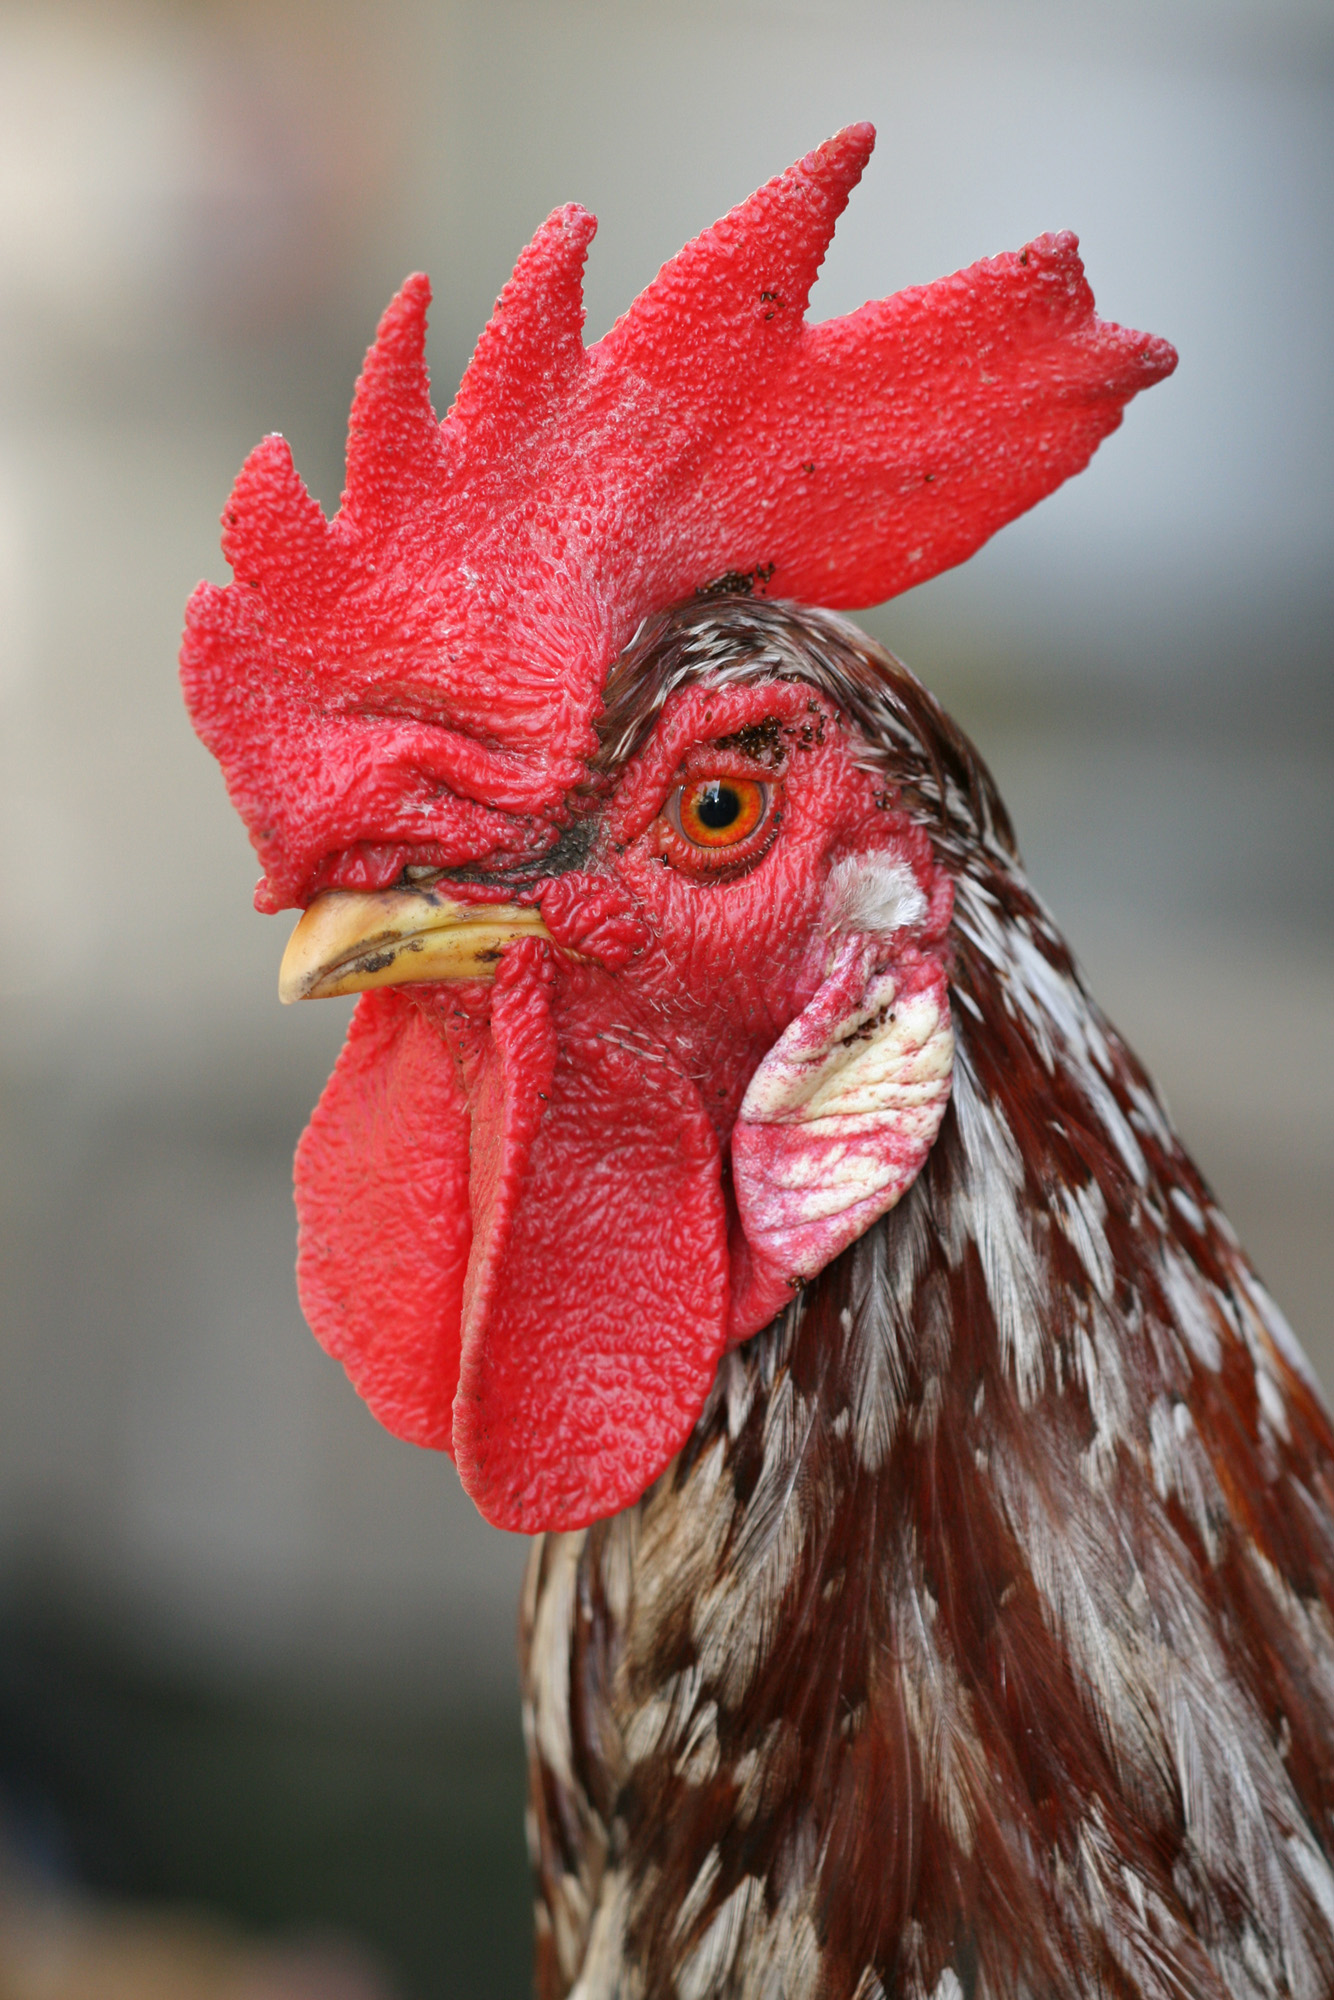 Chicken - Wikipedia